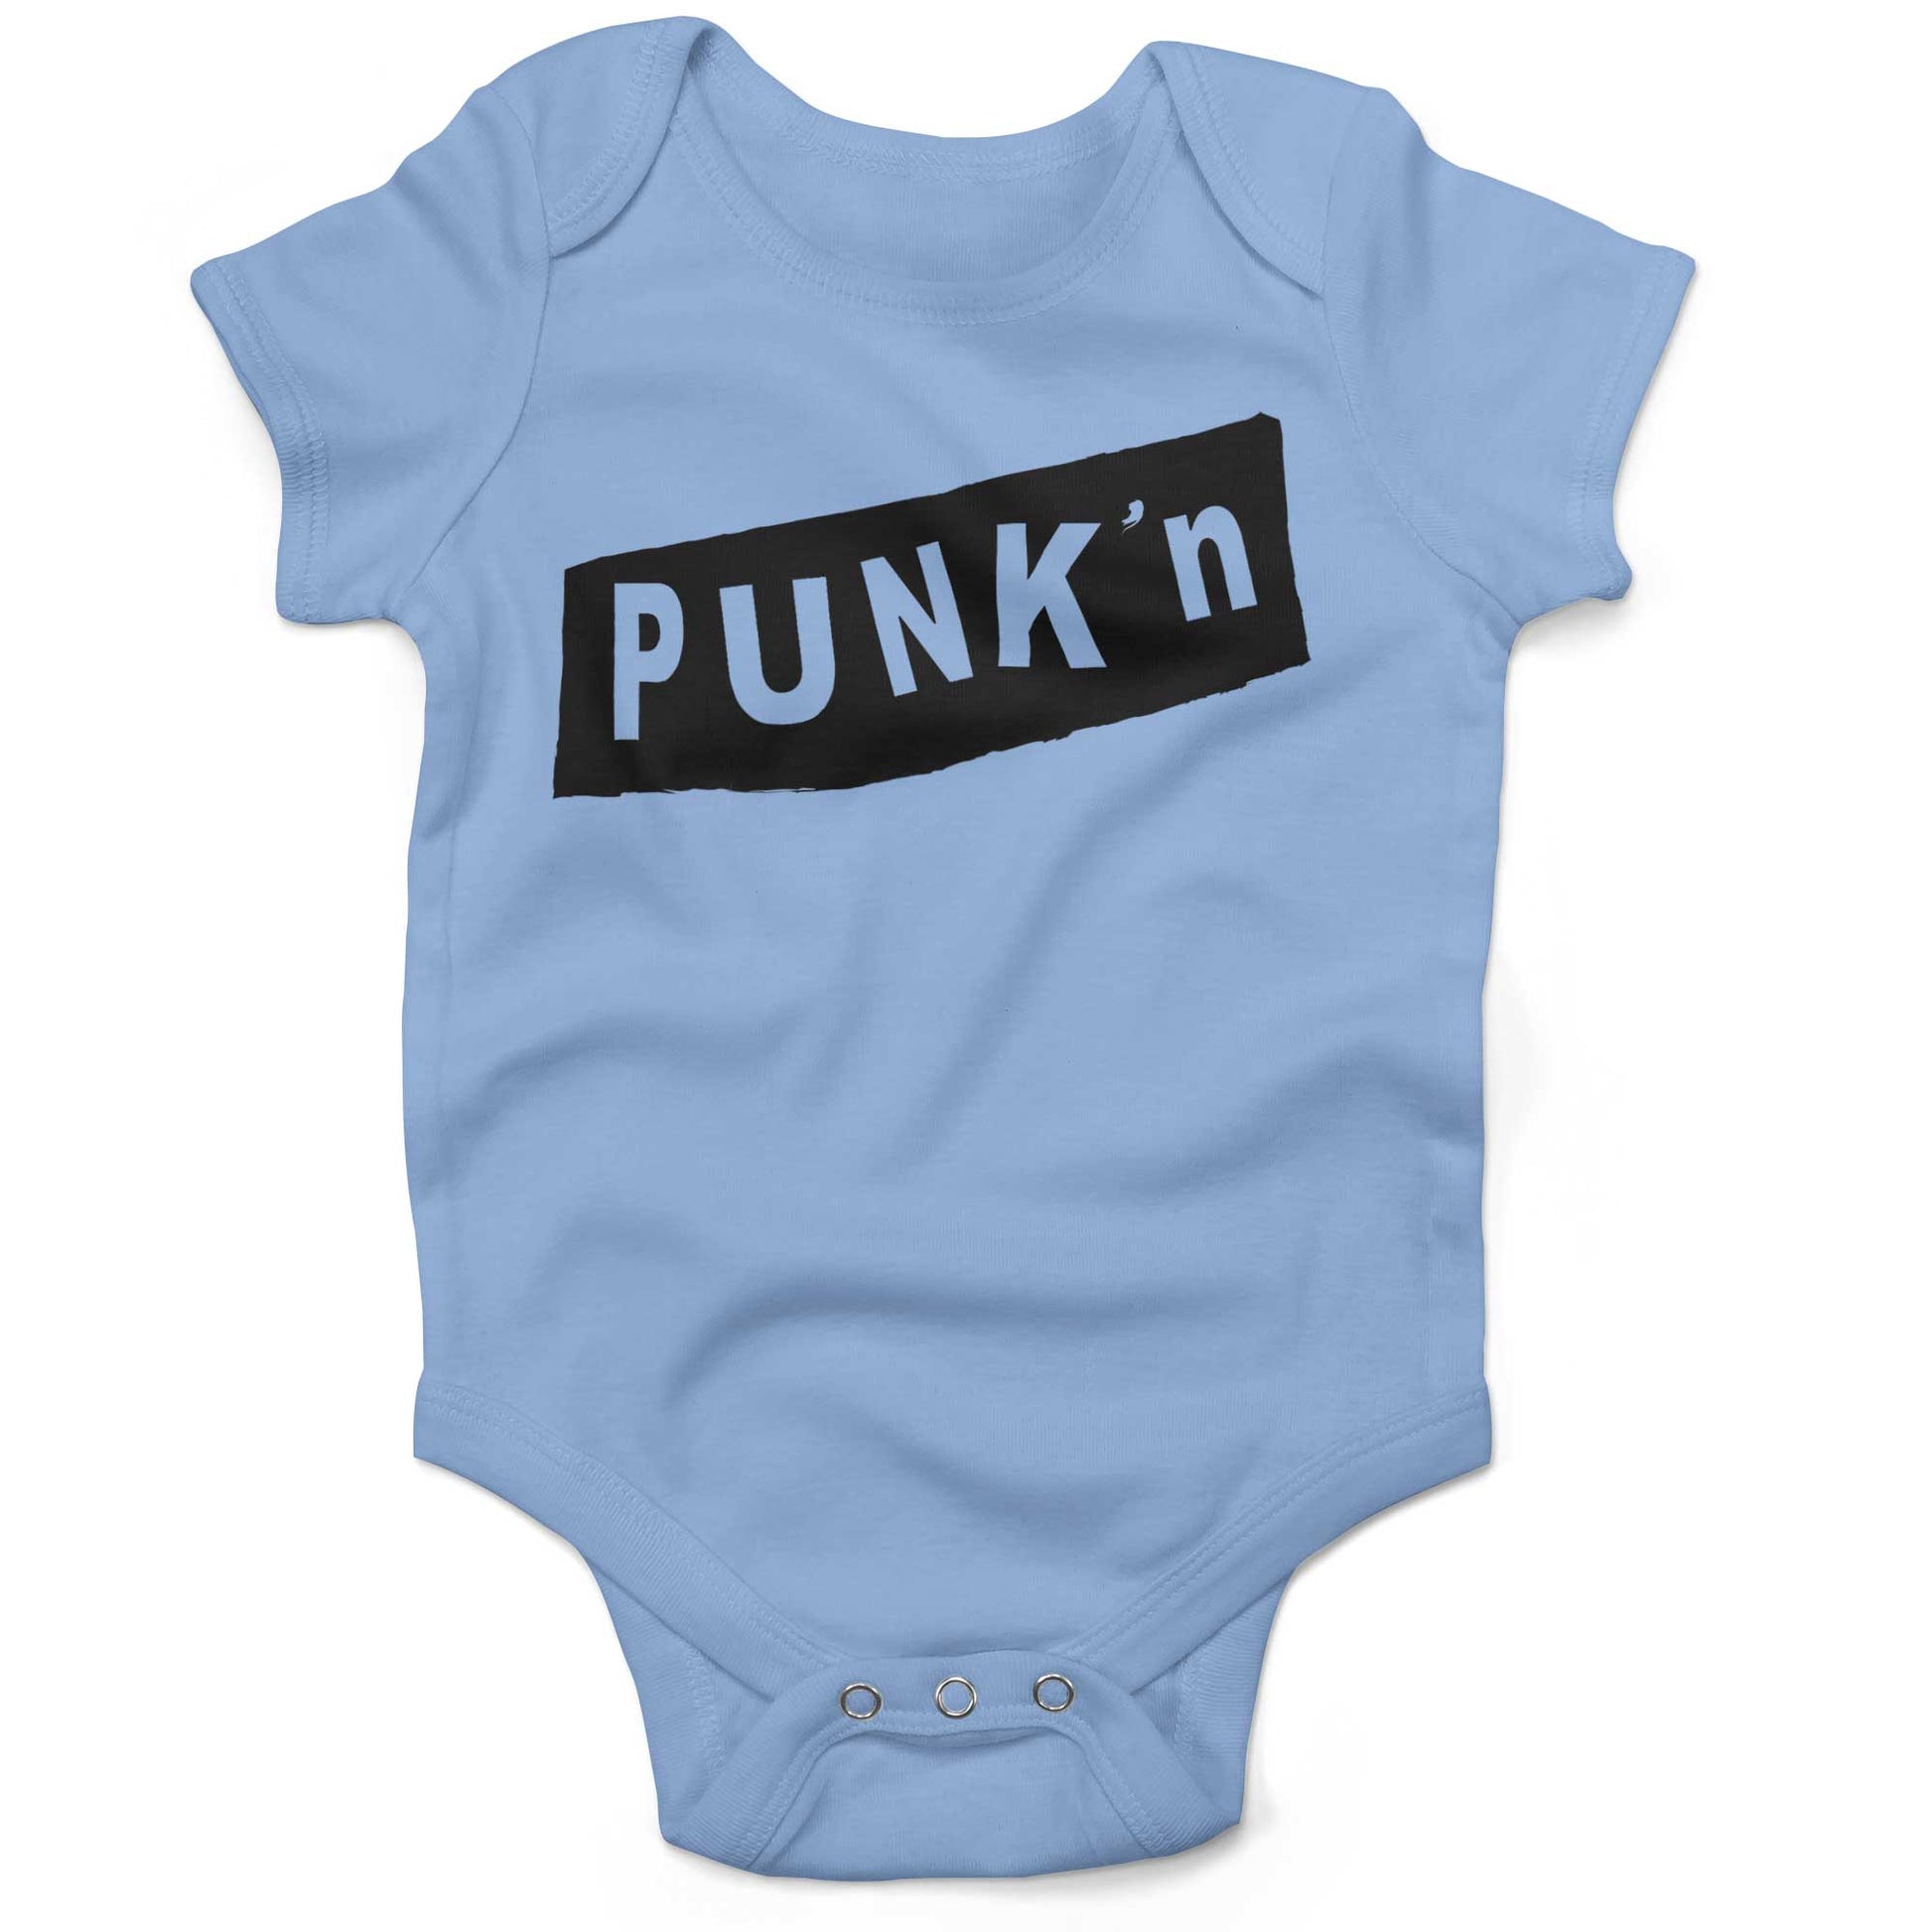 Pumpkin Punk'n Infant Bodysuit or Raglan Tee-Organic Baby Blue-3-6 months